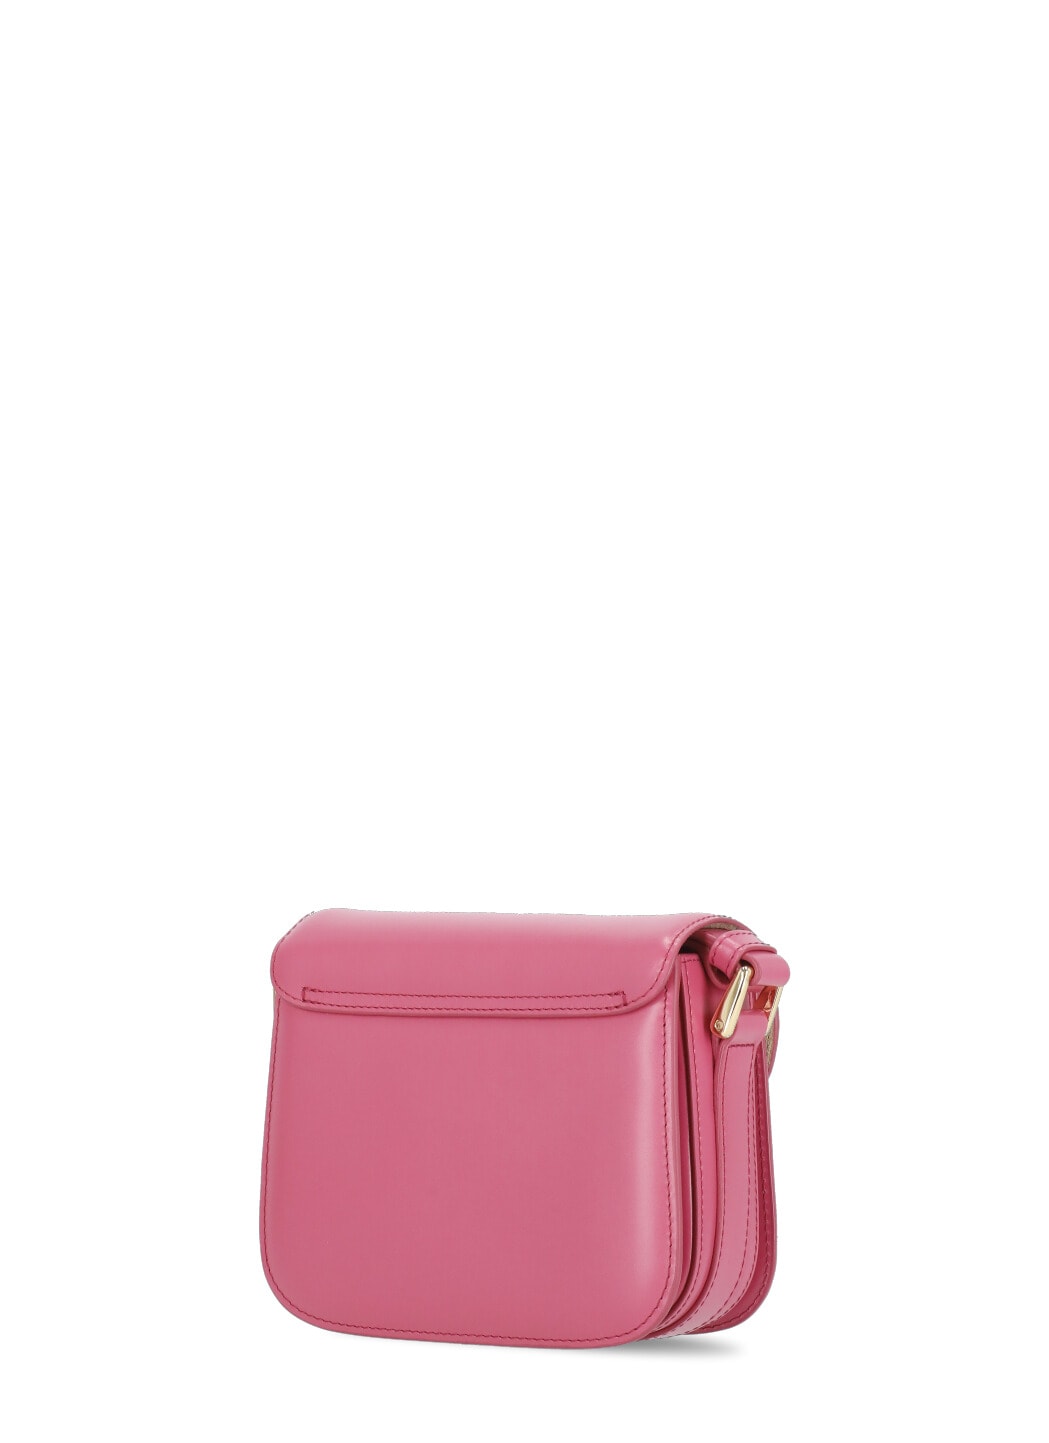 Shop Apc Mini Grace Shoulder Bag In Fuchsia